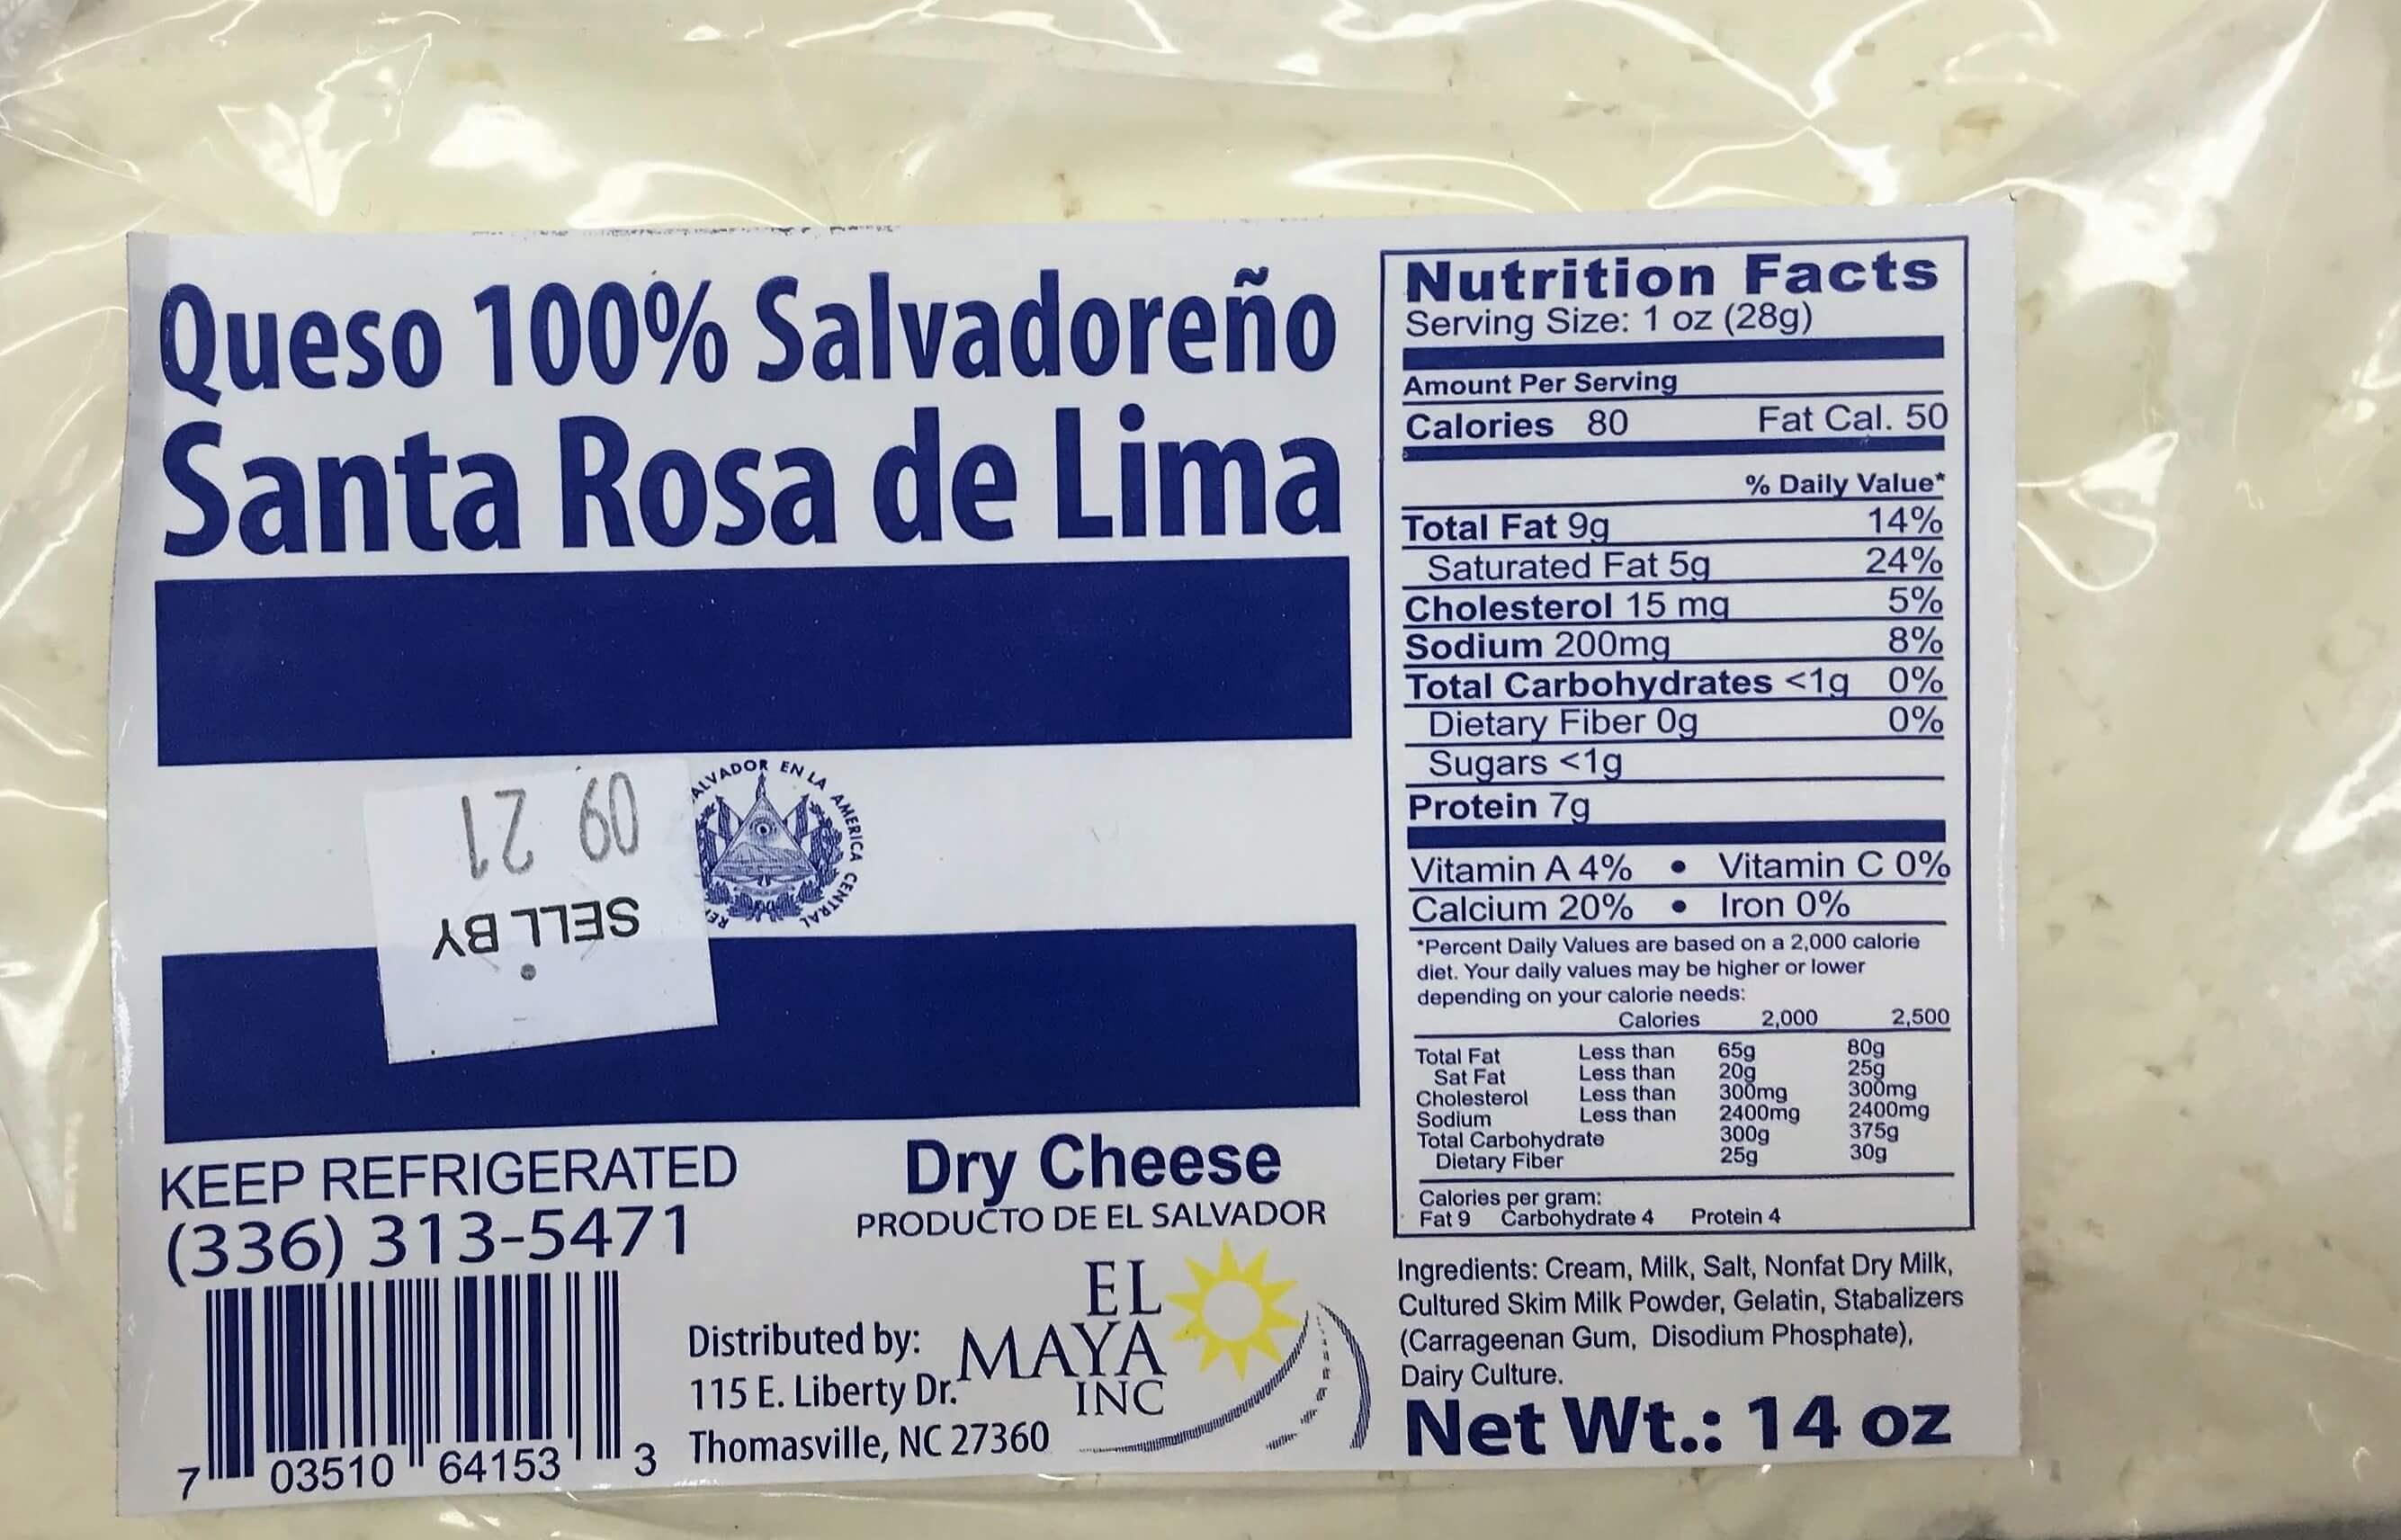 El Maya Inc - Dry Cheese 14oz.